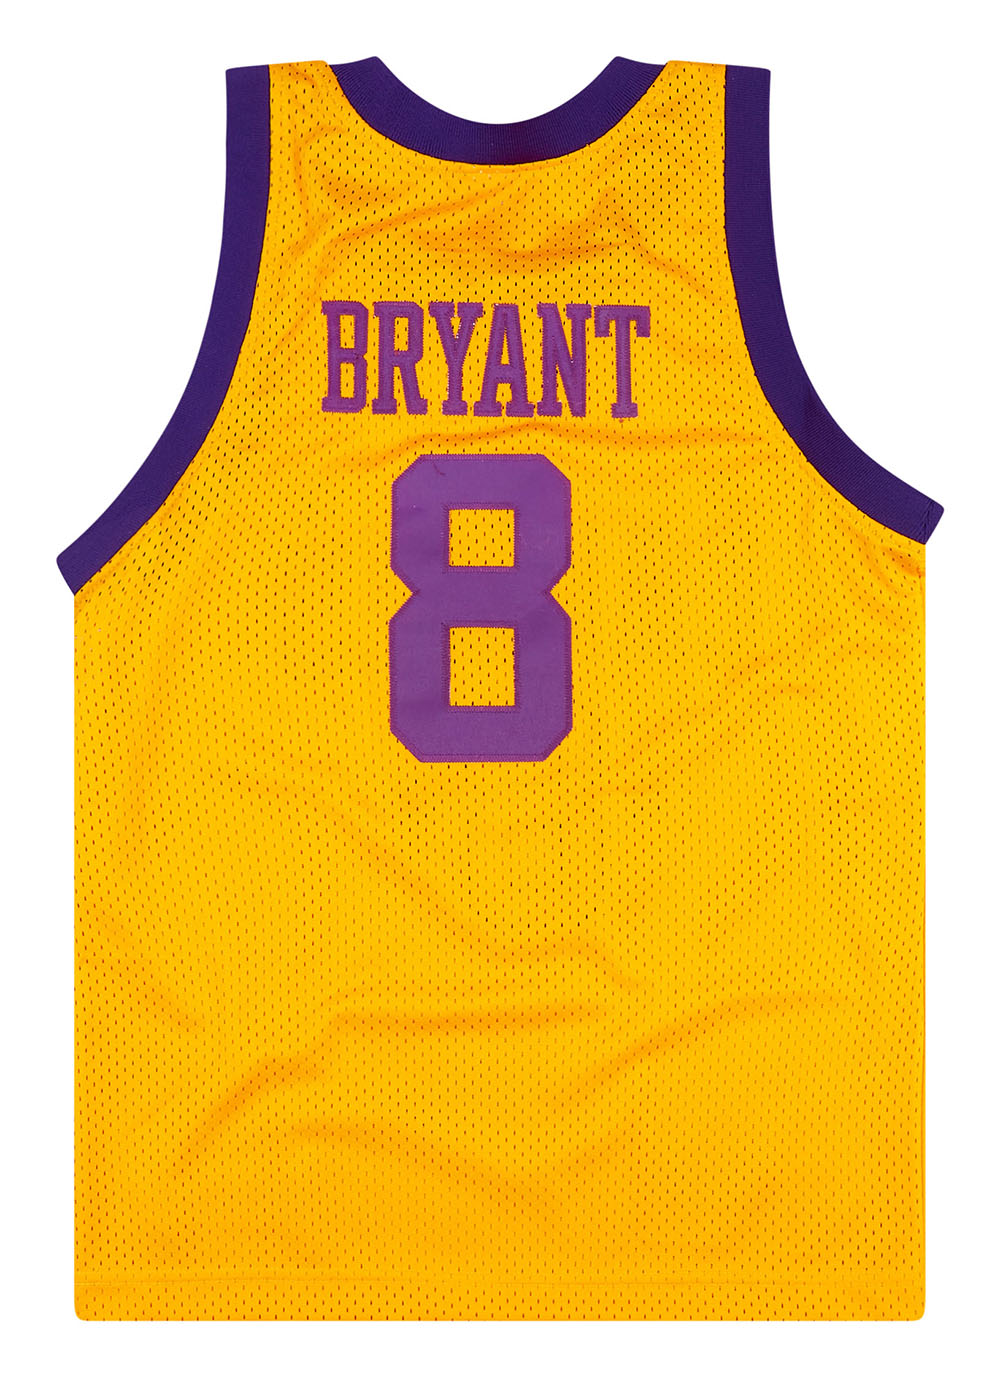 Men's Basketball Jersey Lakers Kobe Bryant #8 #24 Jerseys Purple